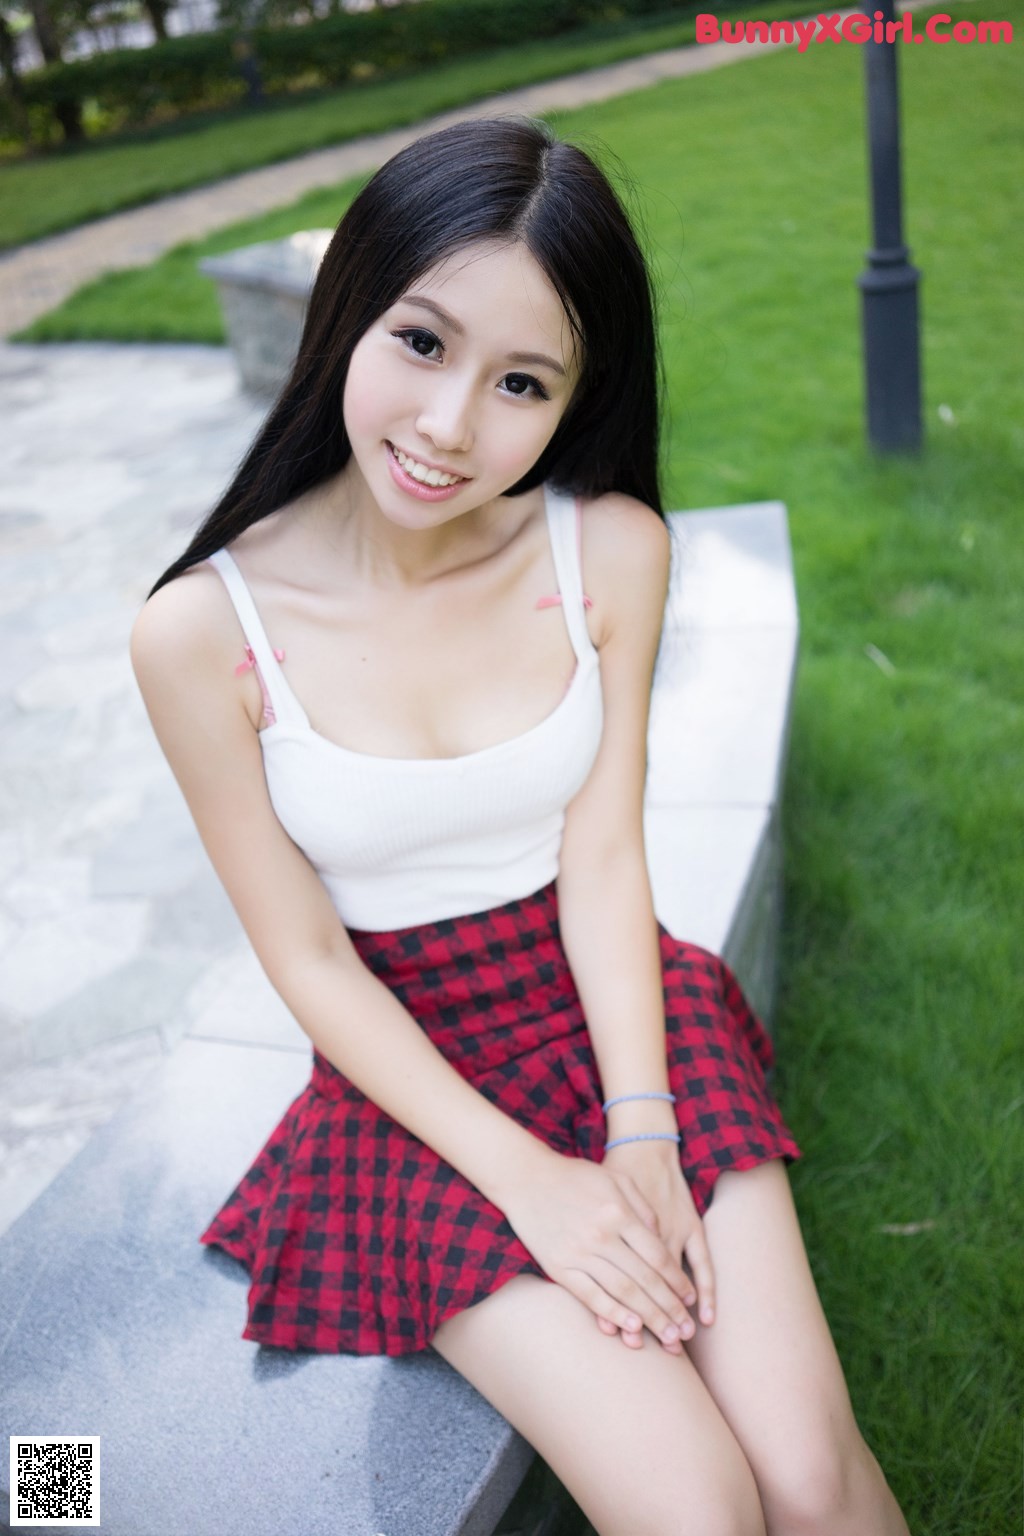 View - TGOD 2014-11-08: Model Yi Xun (一 薰) (77 photos) - ArtXGirl.com